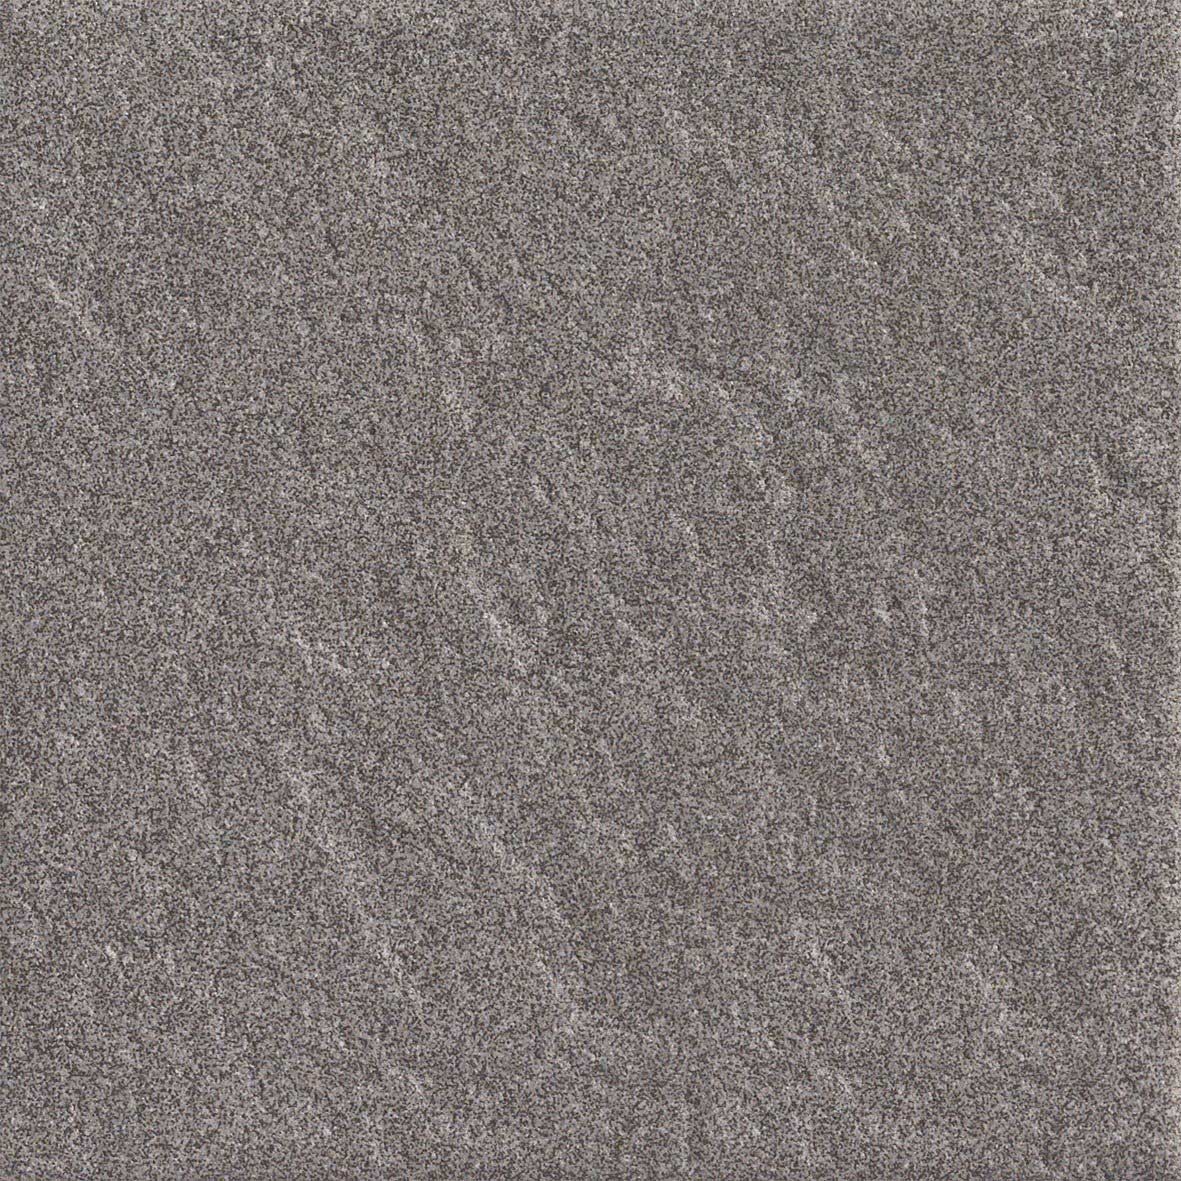 Керамогранит Плитка из керамогранита Marazzi Italy Sistem T Graniti 20x20 серый (M7K0) / коллекция Marazzi Italy / производитель Marazzi Italy / страна Италия